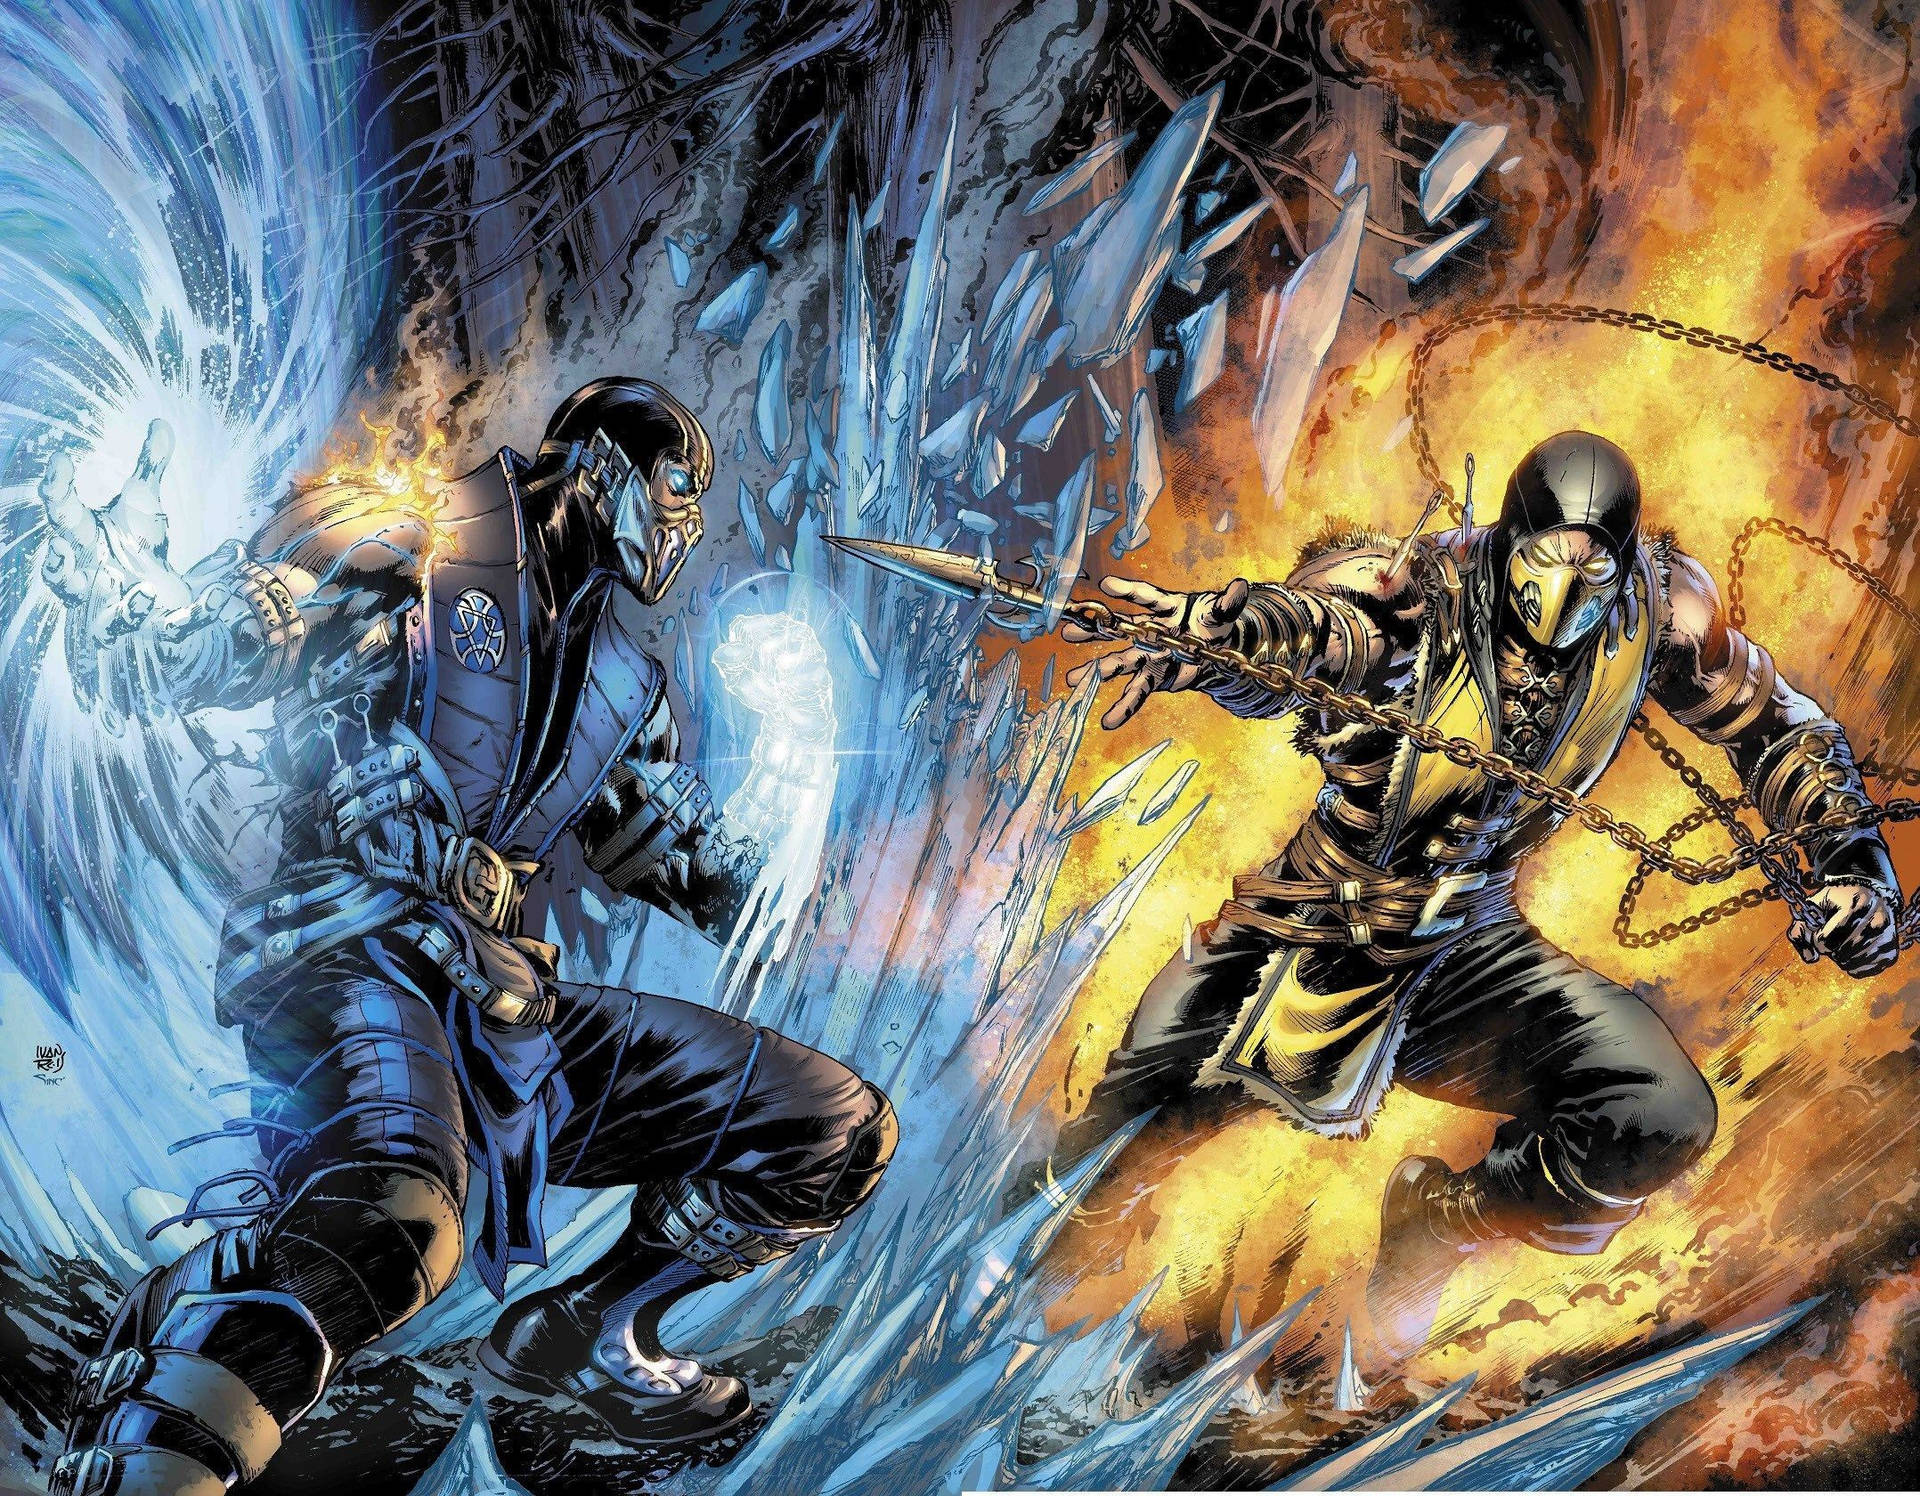 Mortal Kombat Scorpion Vs Sub Zero 2D Wallpaper